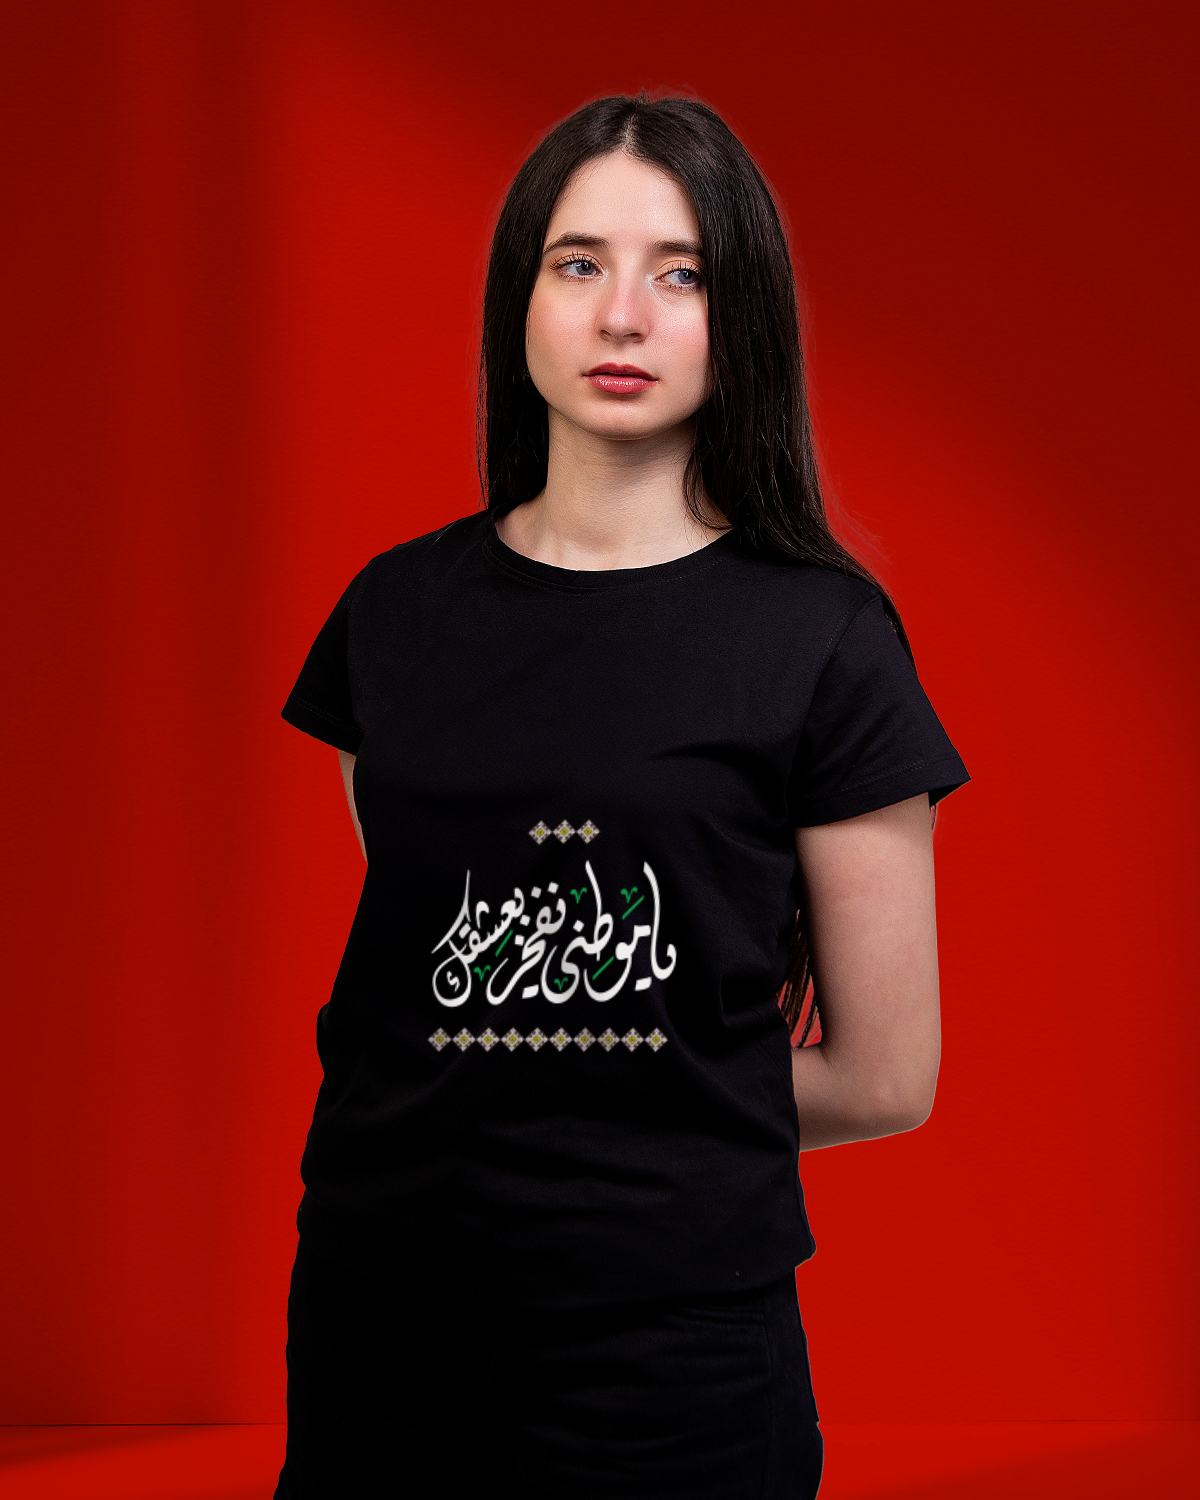 Women's Foundation Day T-shirt (Ya Mawtini Nafkhar Bieashqik)